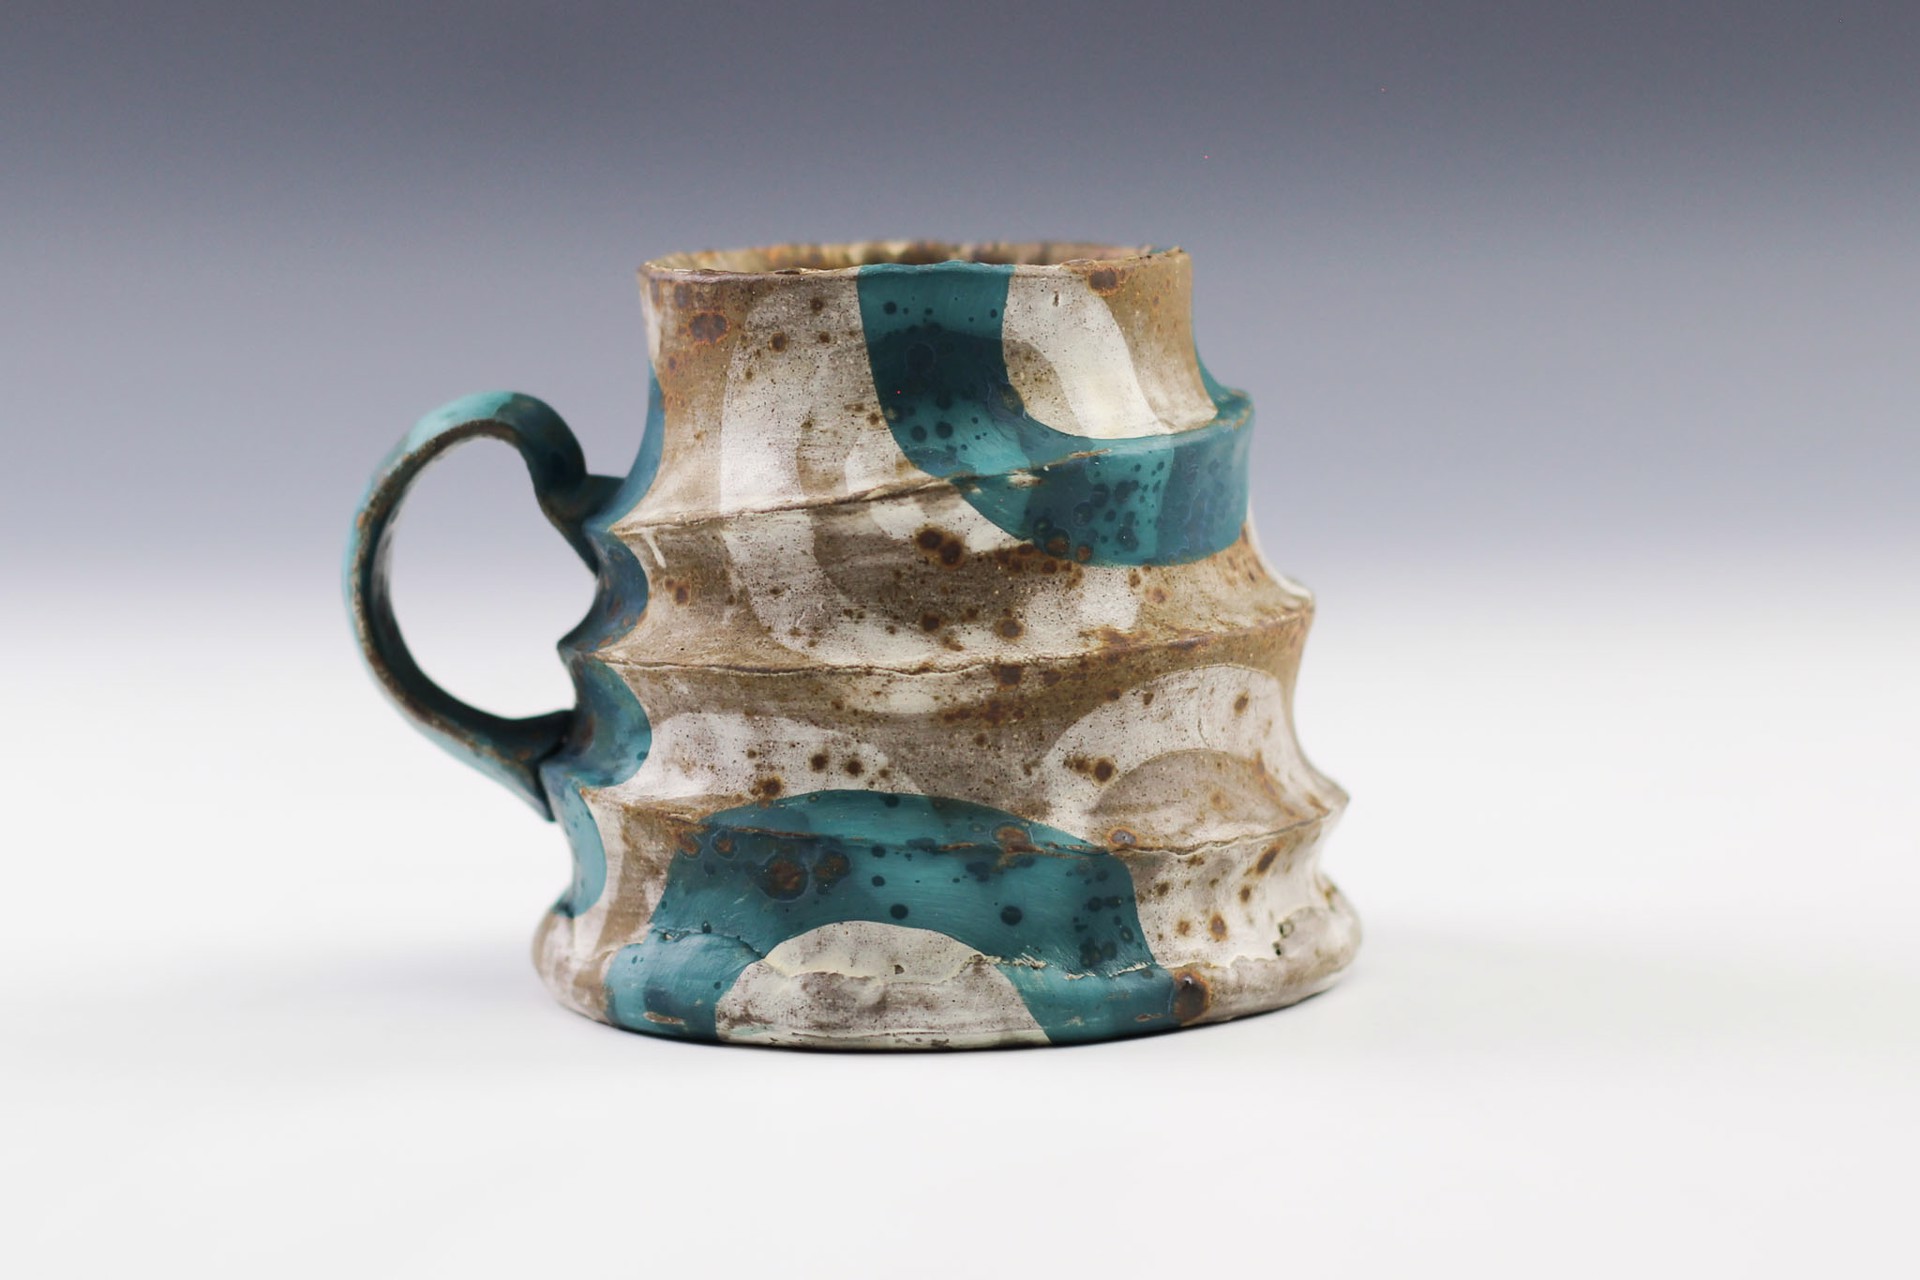 Mug by Kate Marotz